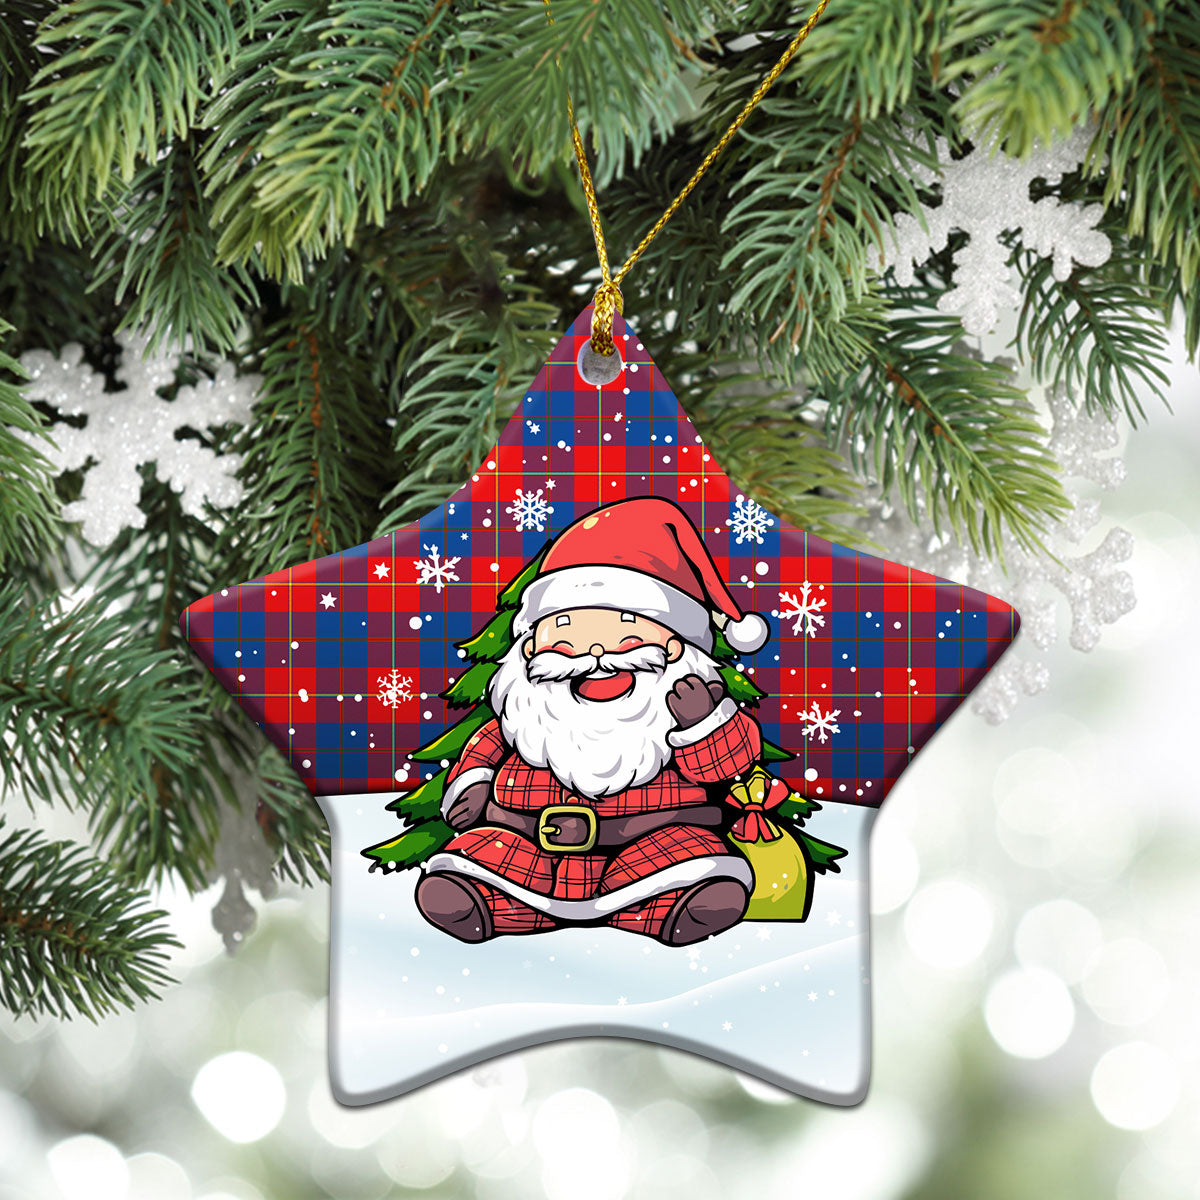 Galloway Red Tartan Christmas Ceramic Ornament - Scottish Santa Style